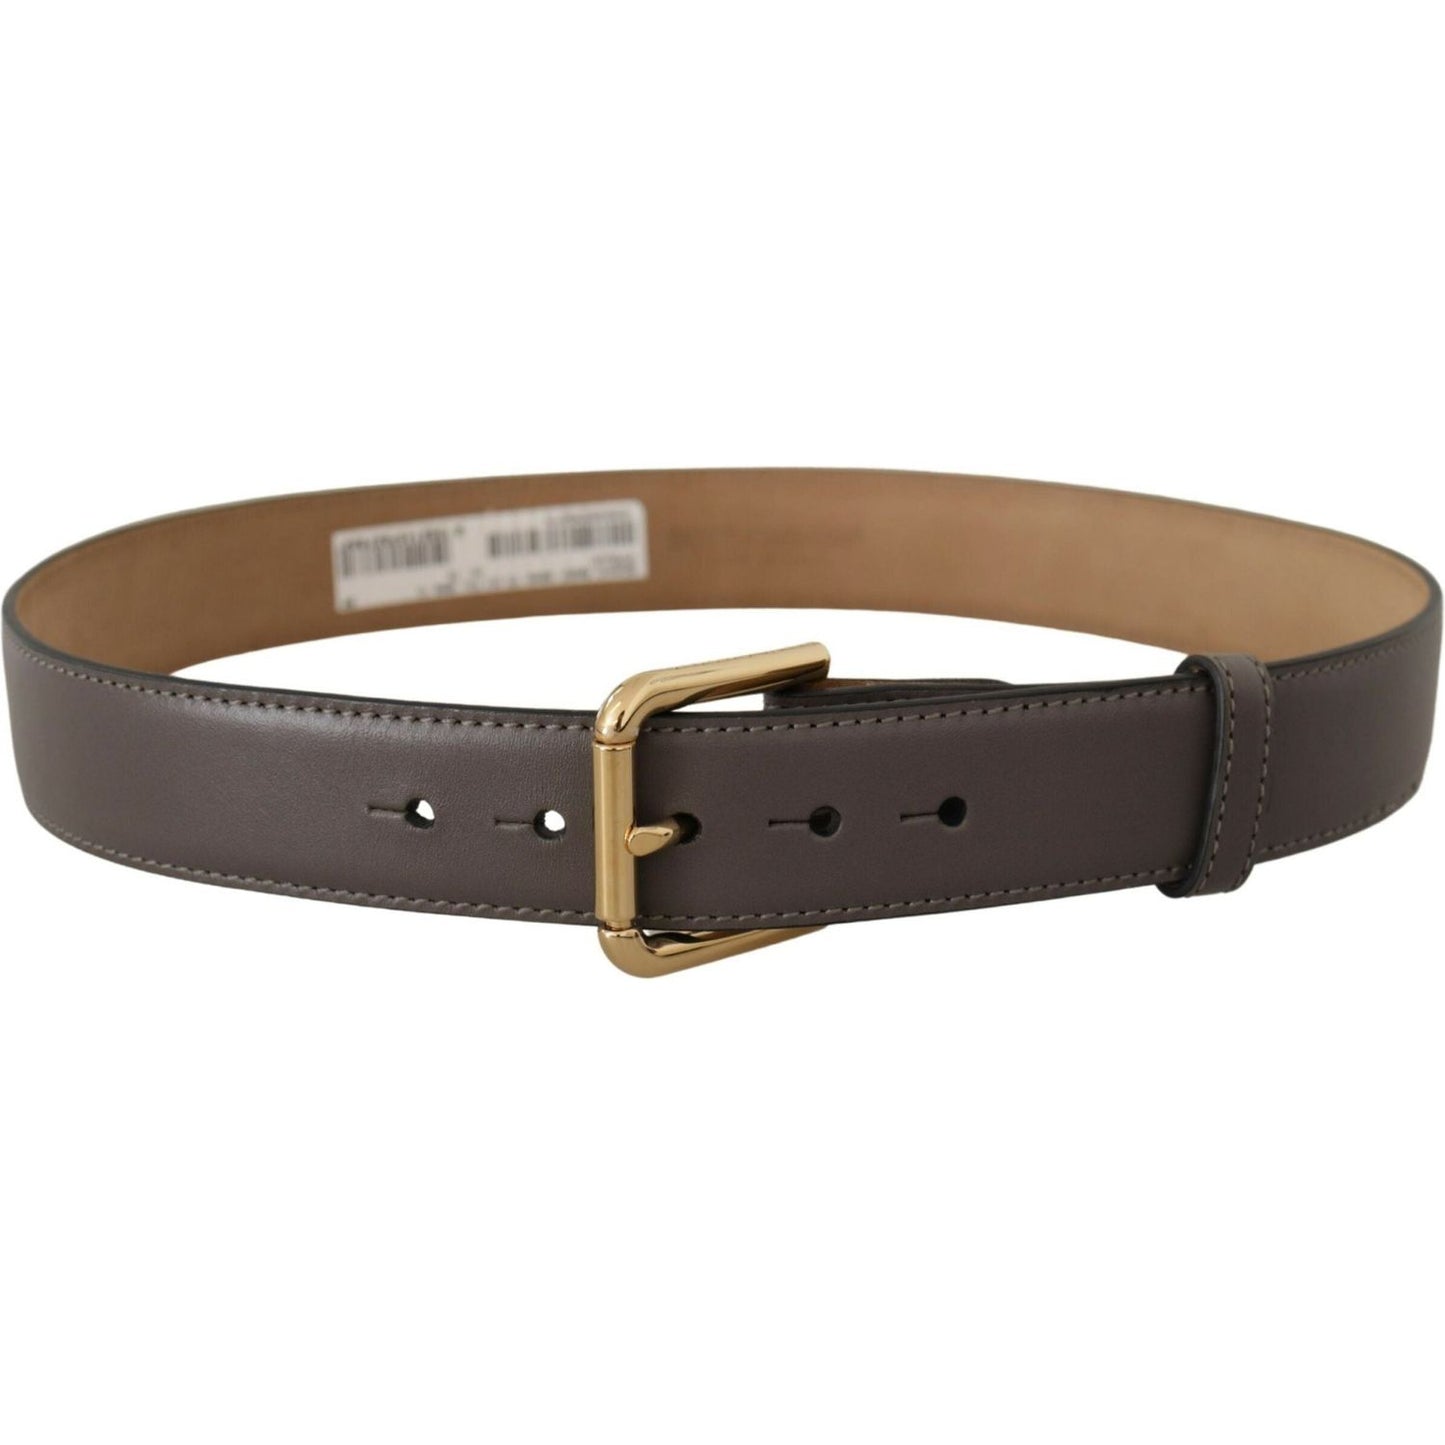 Dolce & Gabbana Elegant Engraved Buckle Leather Belt gray-calfskin-leather-gold-metal-logo-buckle-belt IMG_8908-scaled-9c01daa1-aed.jpg